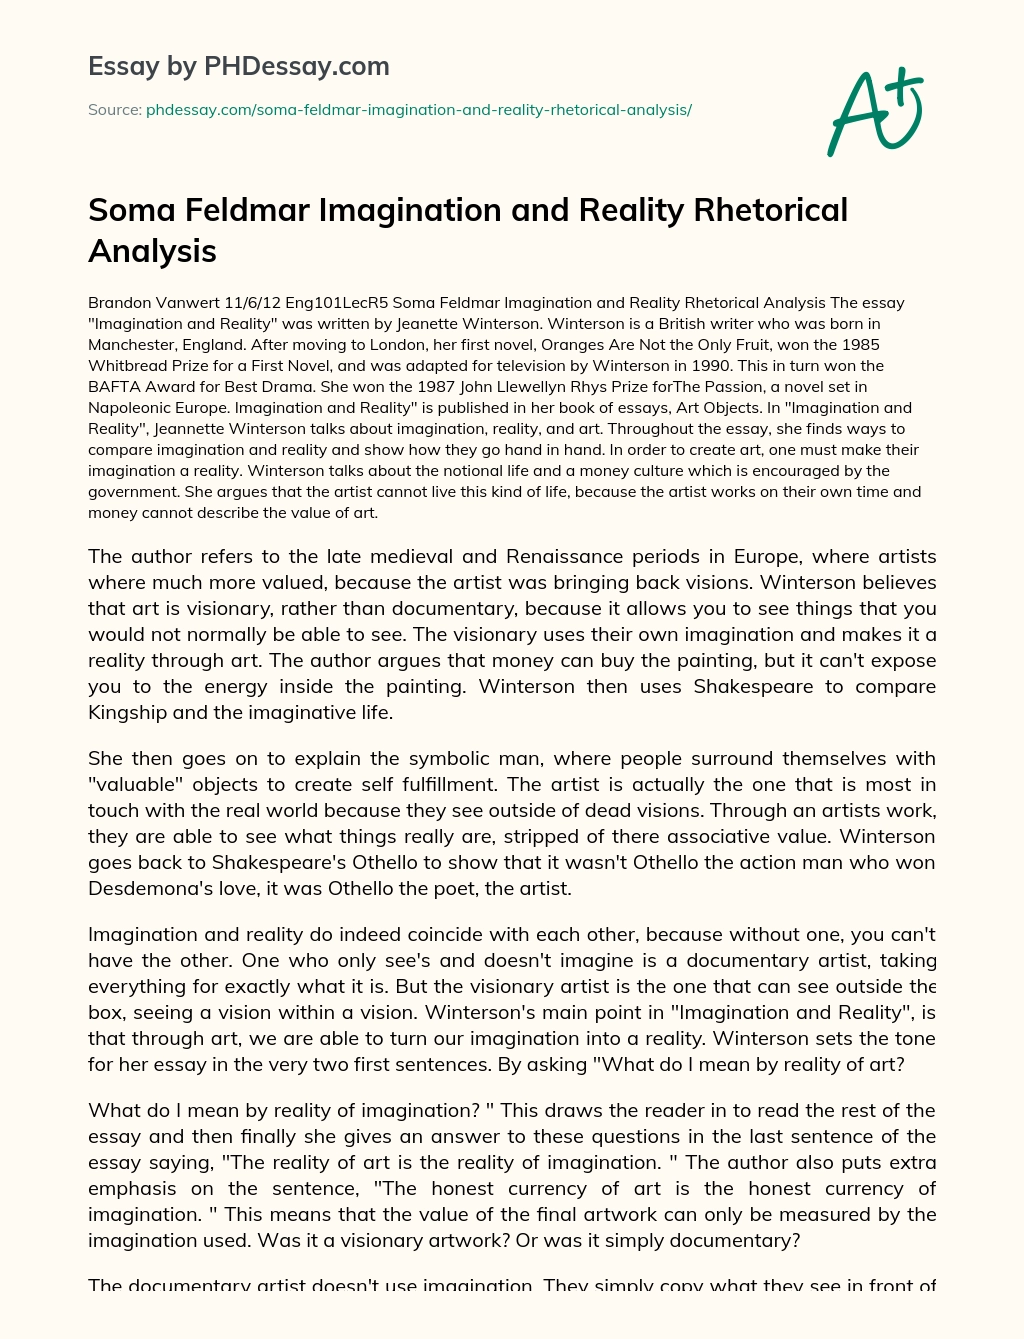 Soma Feldmar Imagination and Reality Rhetorical Analysis essay